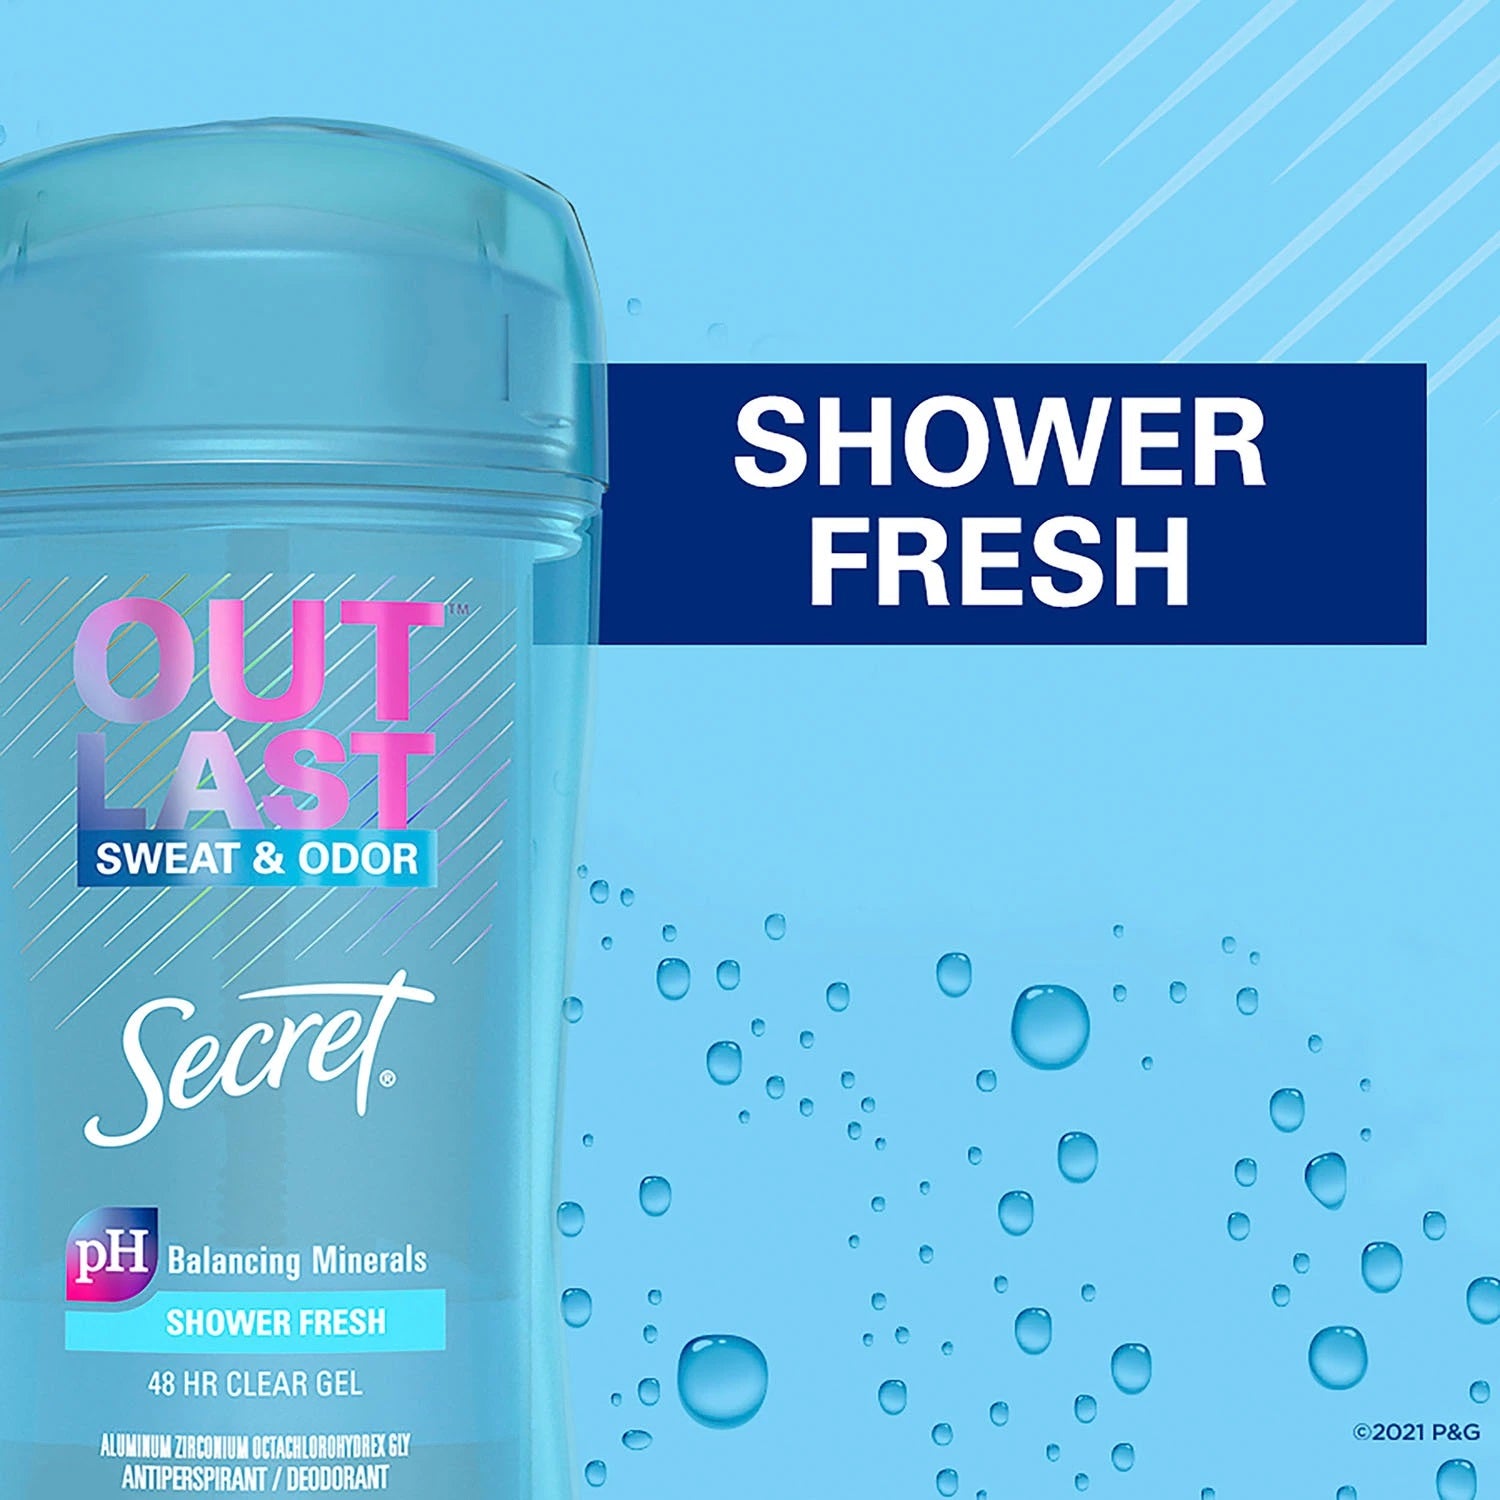 Shower fresh. Lady's Secret антиперспирант. Secret Outlast Sweat & Odor, Shower Fresh,. Дезодорант Secret Powder Flash. Гель дезодорант Корвет г.Дмитров.